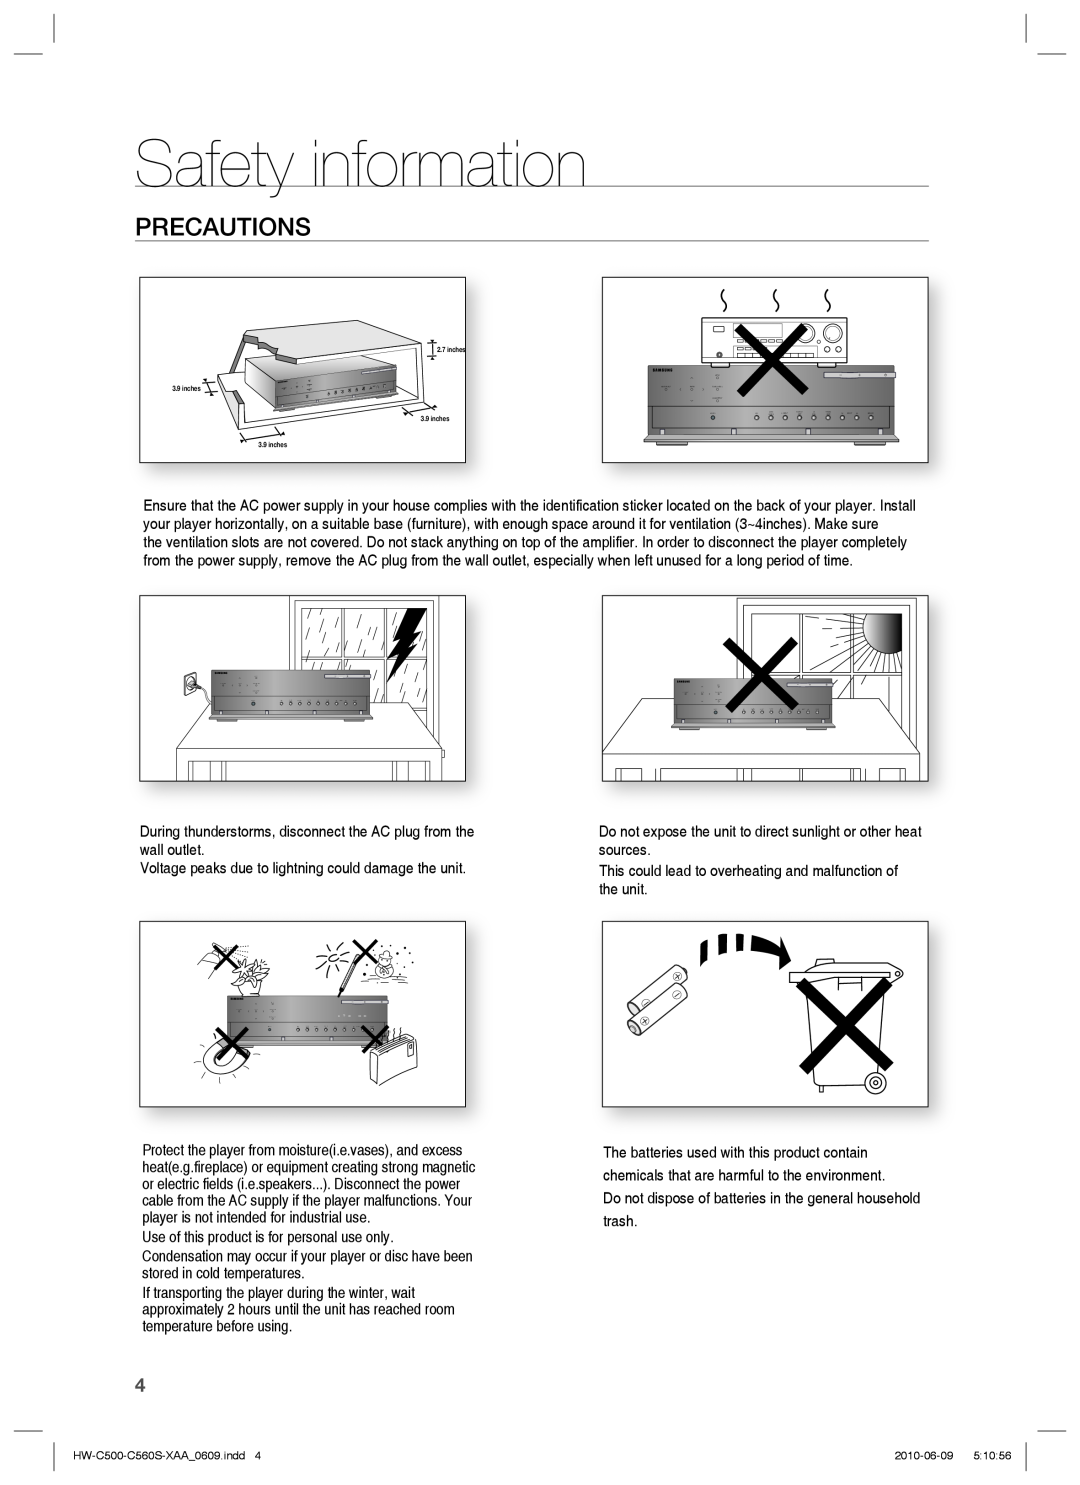 Samsung HW-C500, HW-C560S user manual Precautions, Safety information 